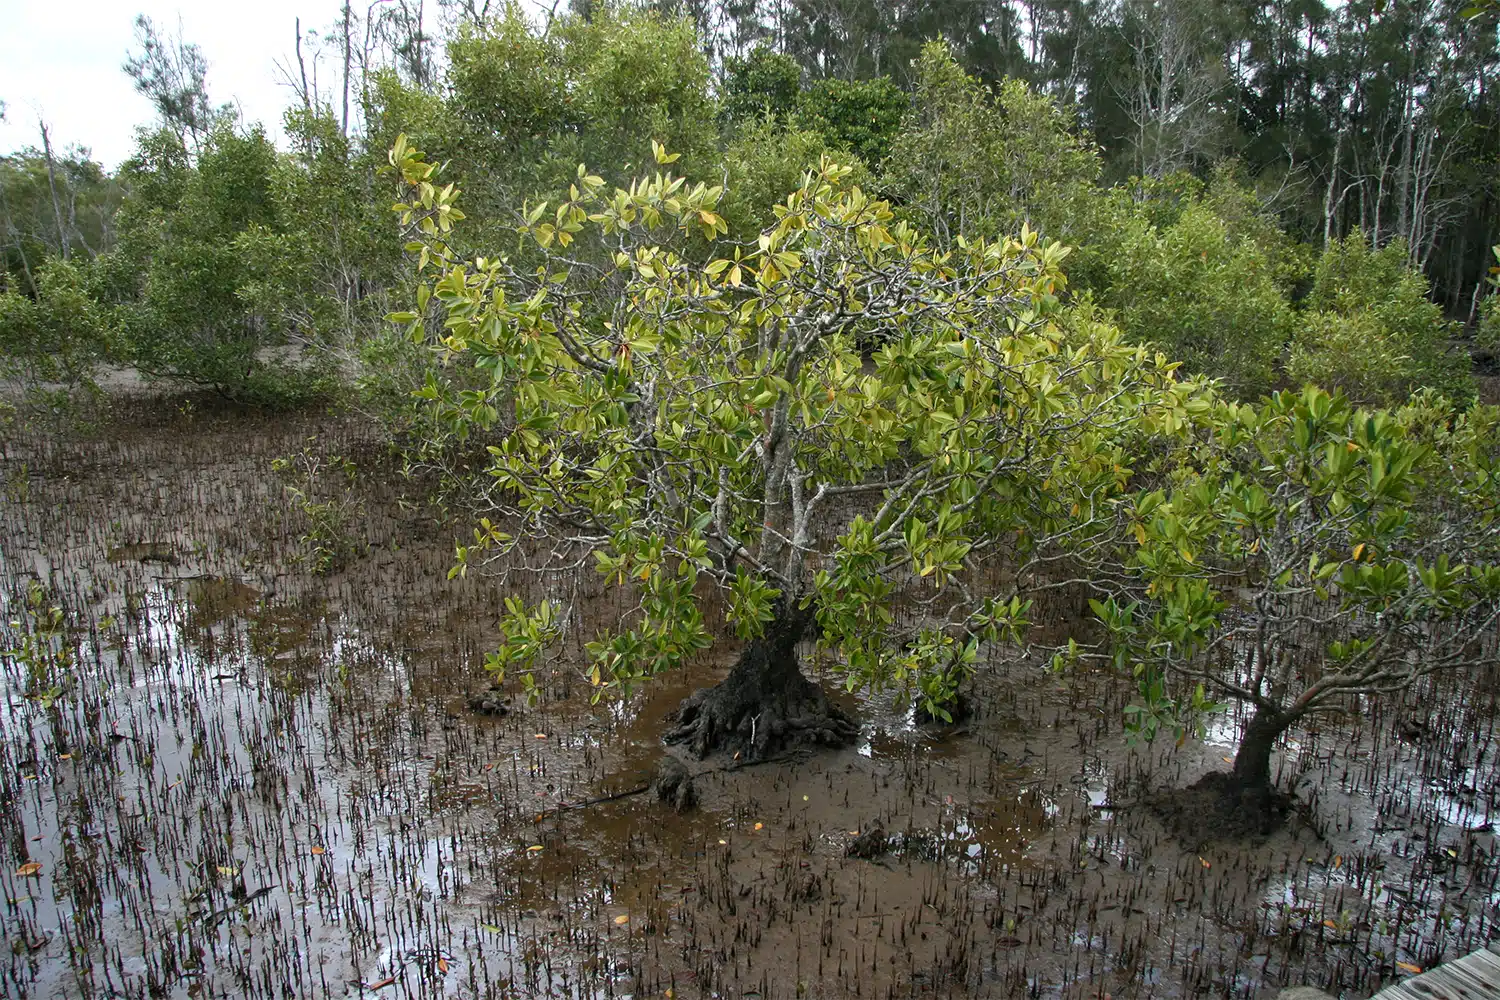 Bruguiera gymnorhiza mangrove in habitat